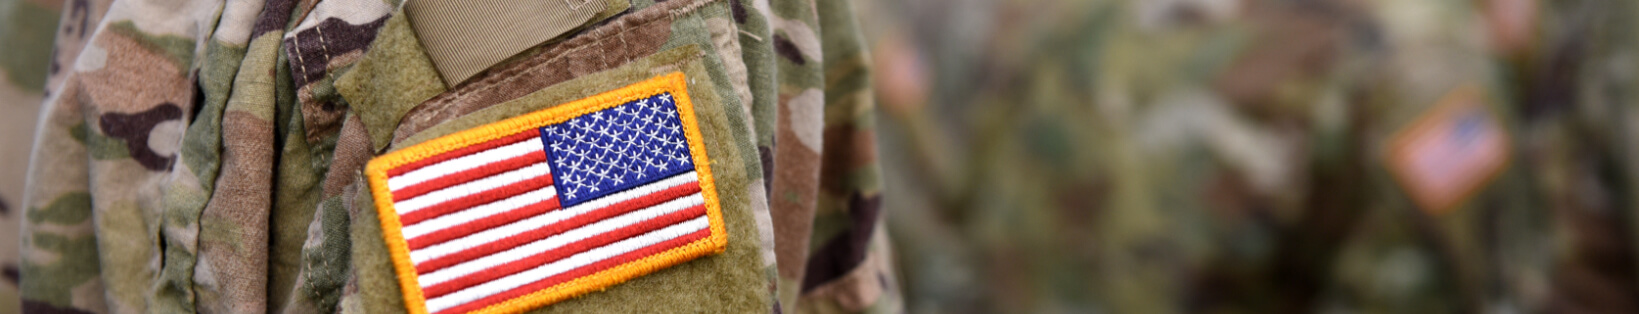 military service member flag on arm